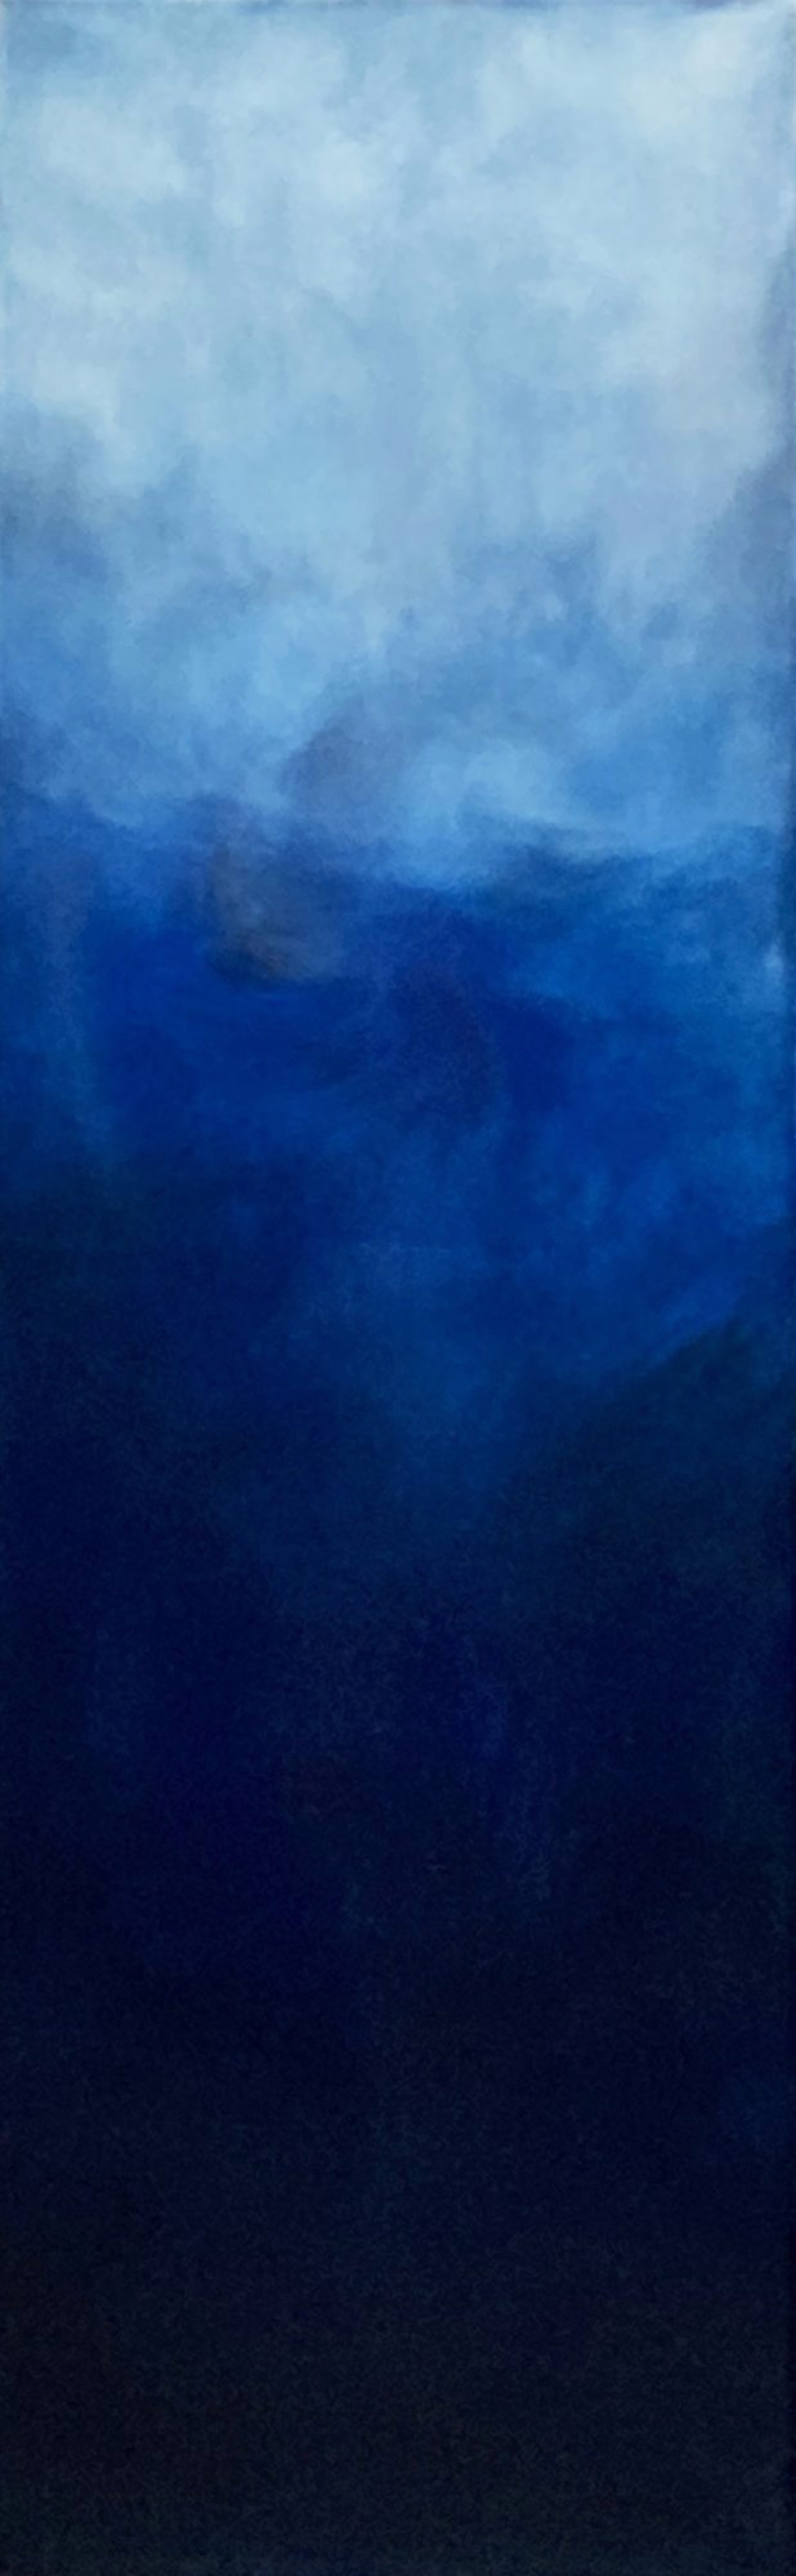 "Blue Into Black No. 3" by Christina Ramirez circa 2007 by Art One Resale Inventory